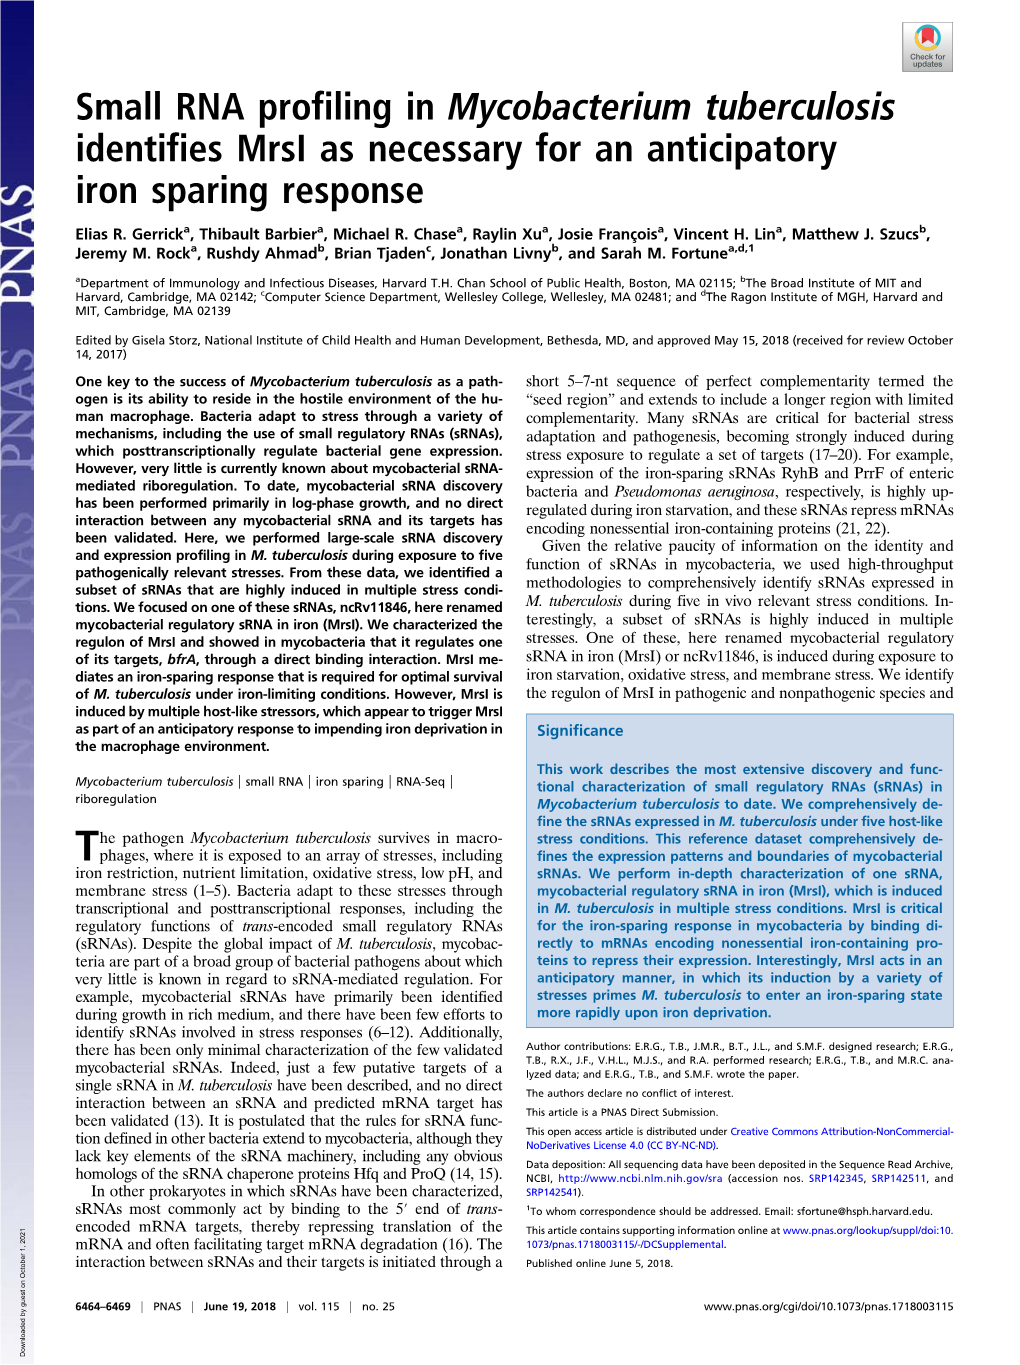 Small RNA Profiling in Mycobacterium Tuberculosis Identifies Mrsi As Necessary for an Anticipatory Iron Sparing Response